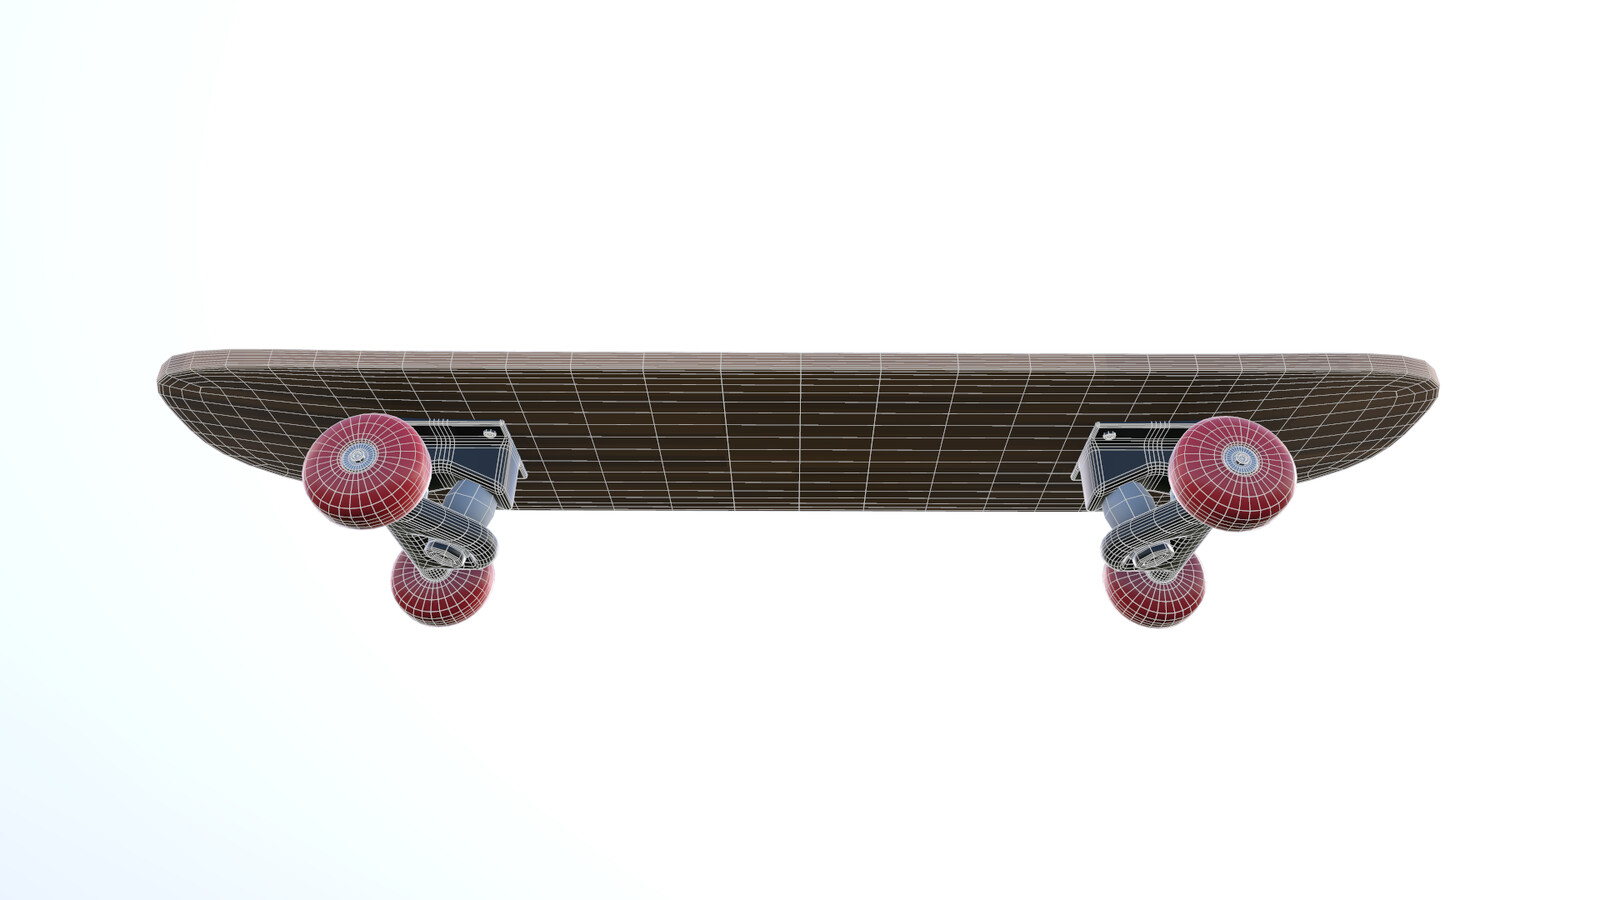 Wooden Skateboard wireframe 6